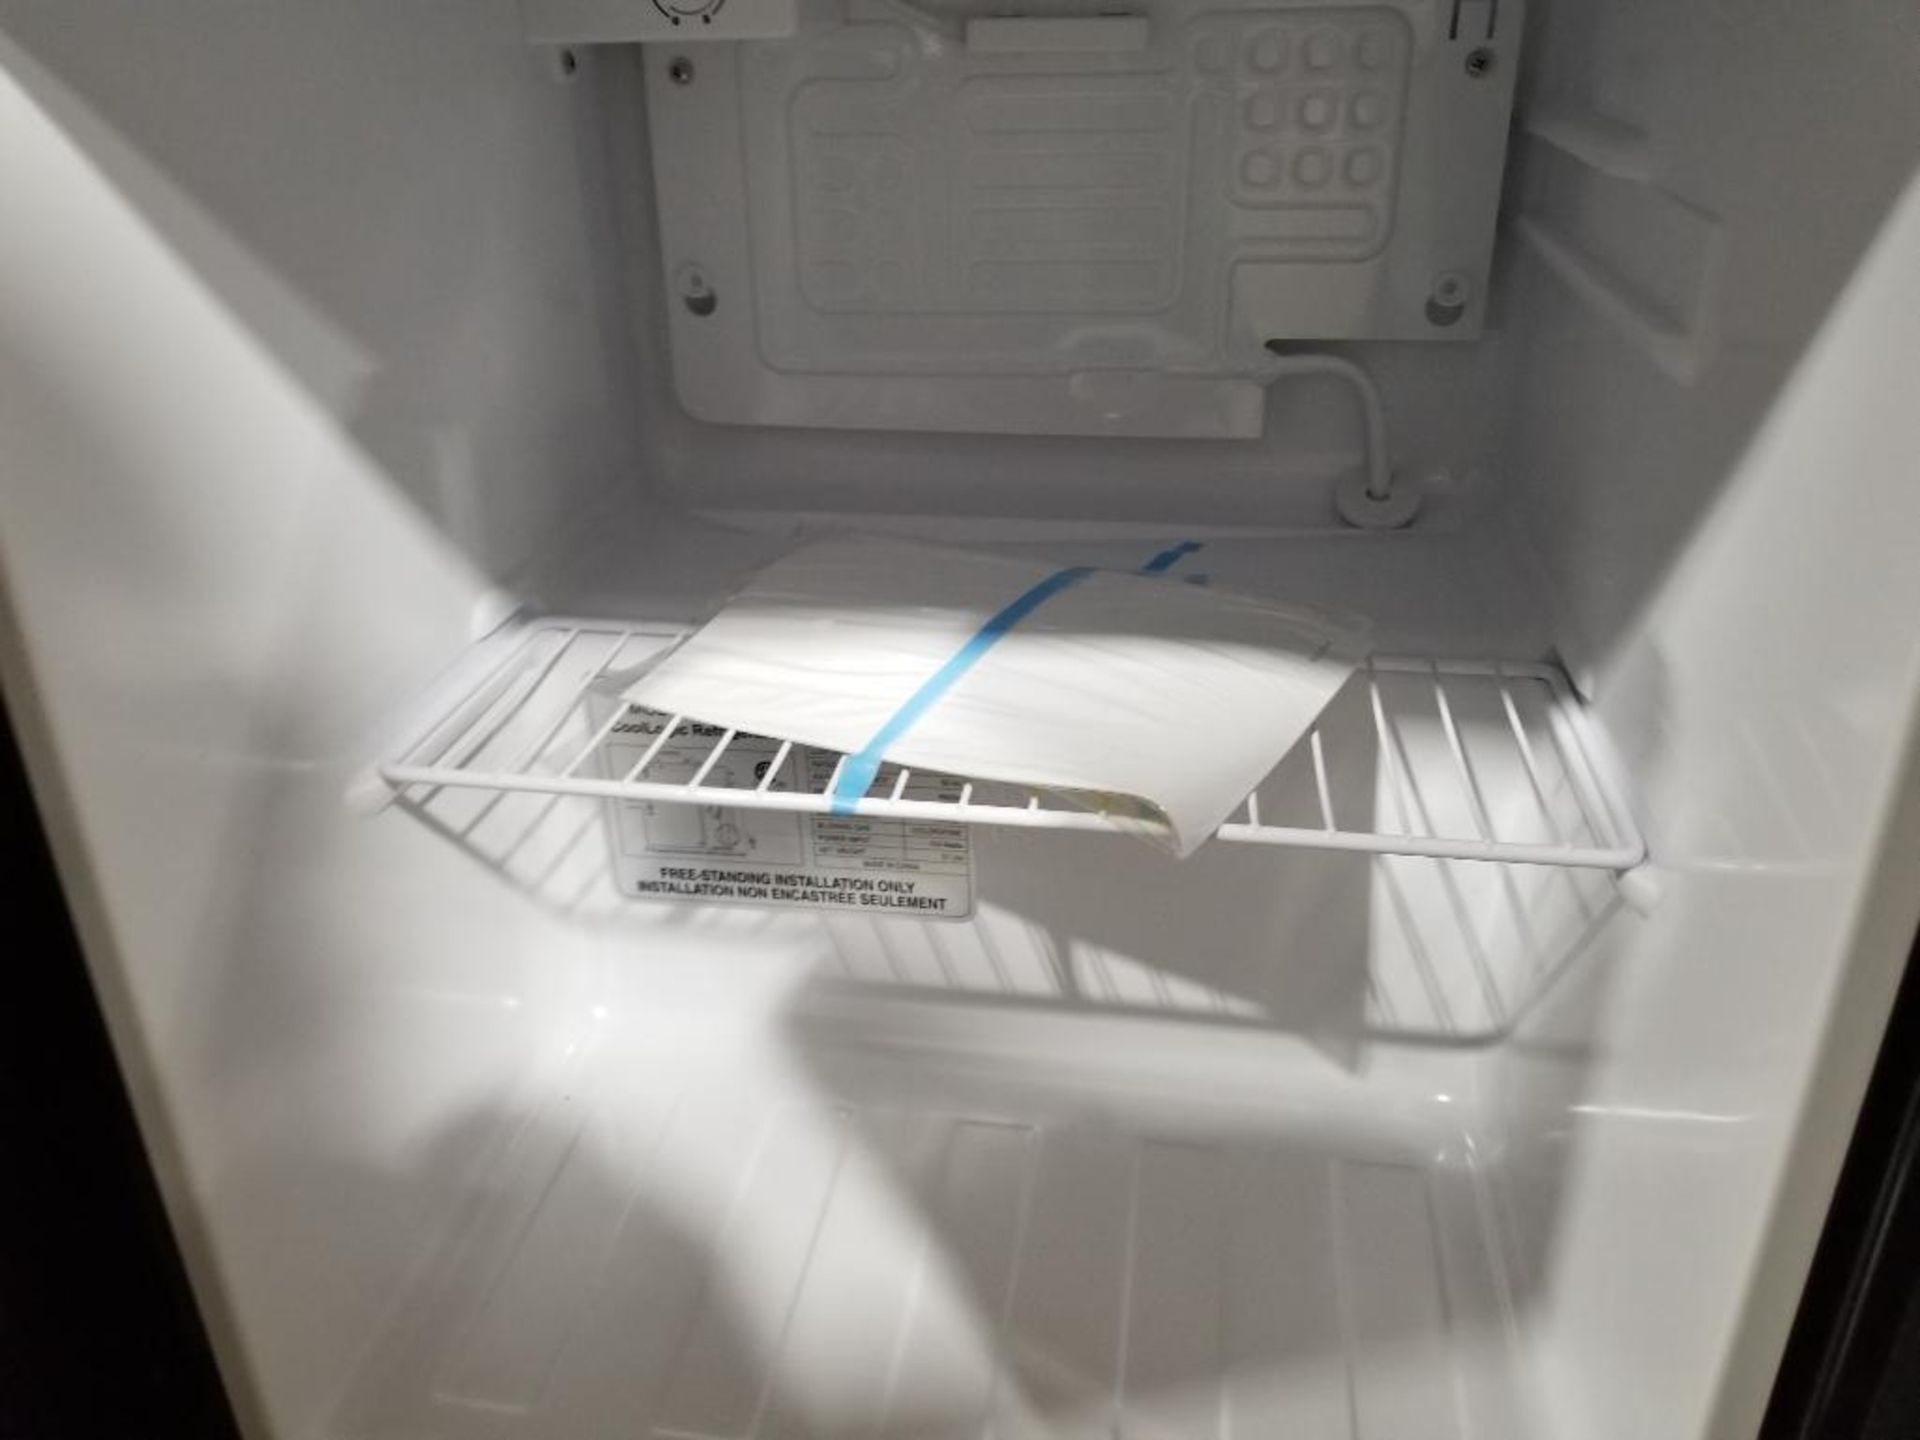 Qty 2 - Cool Logic refrigerator. Model CL1.6-B. 115v single phase. - Image 4 of 9